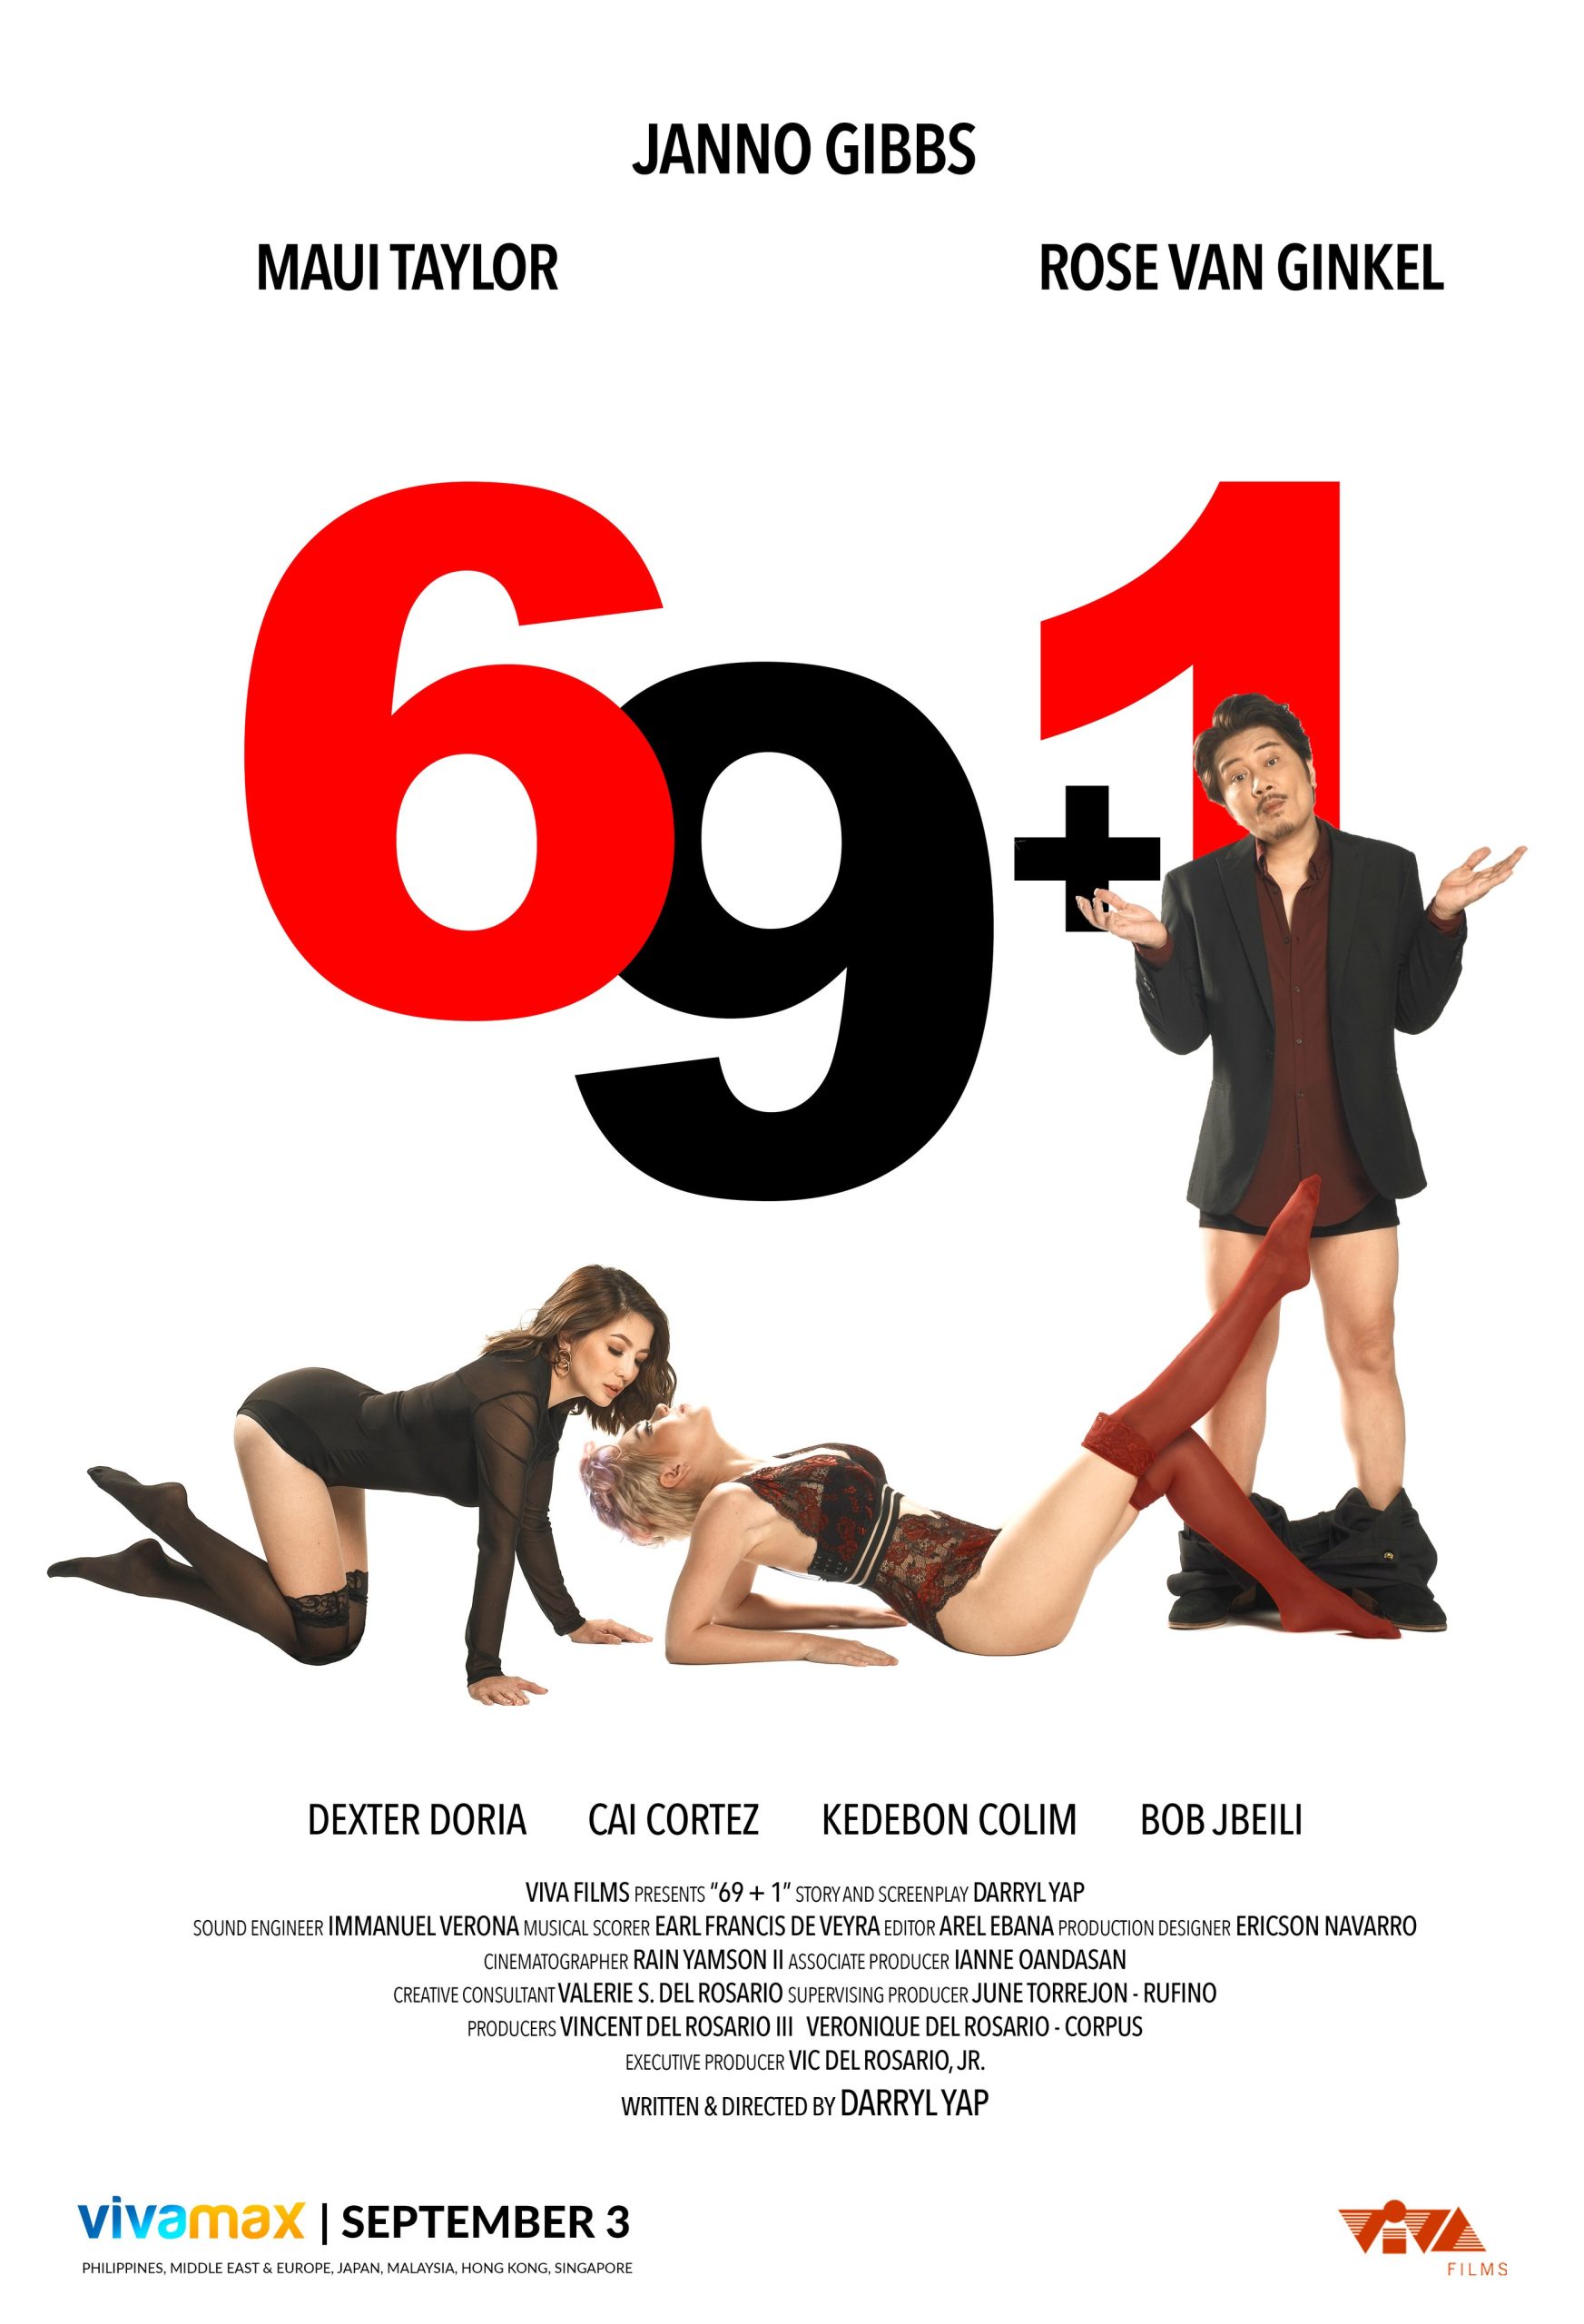 69 Plus 1 2021 vivamax movie poster 2